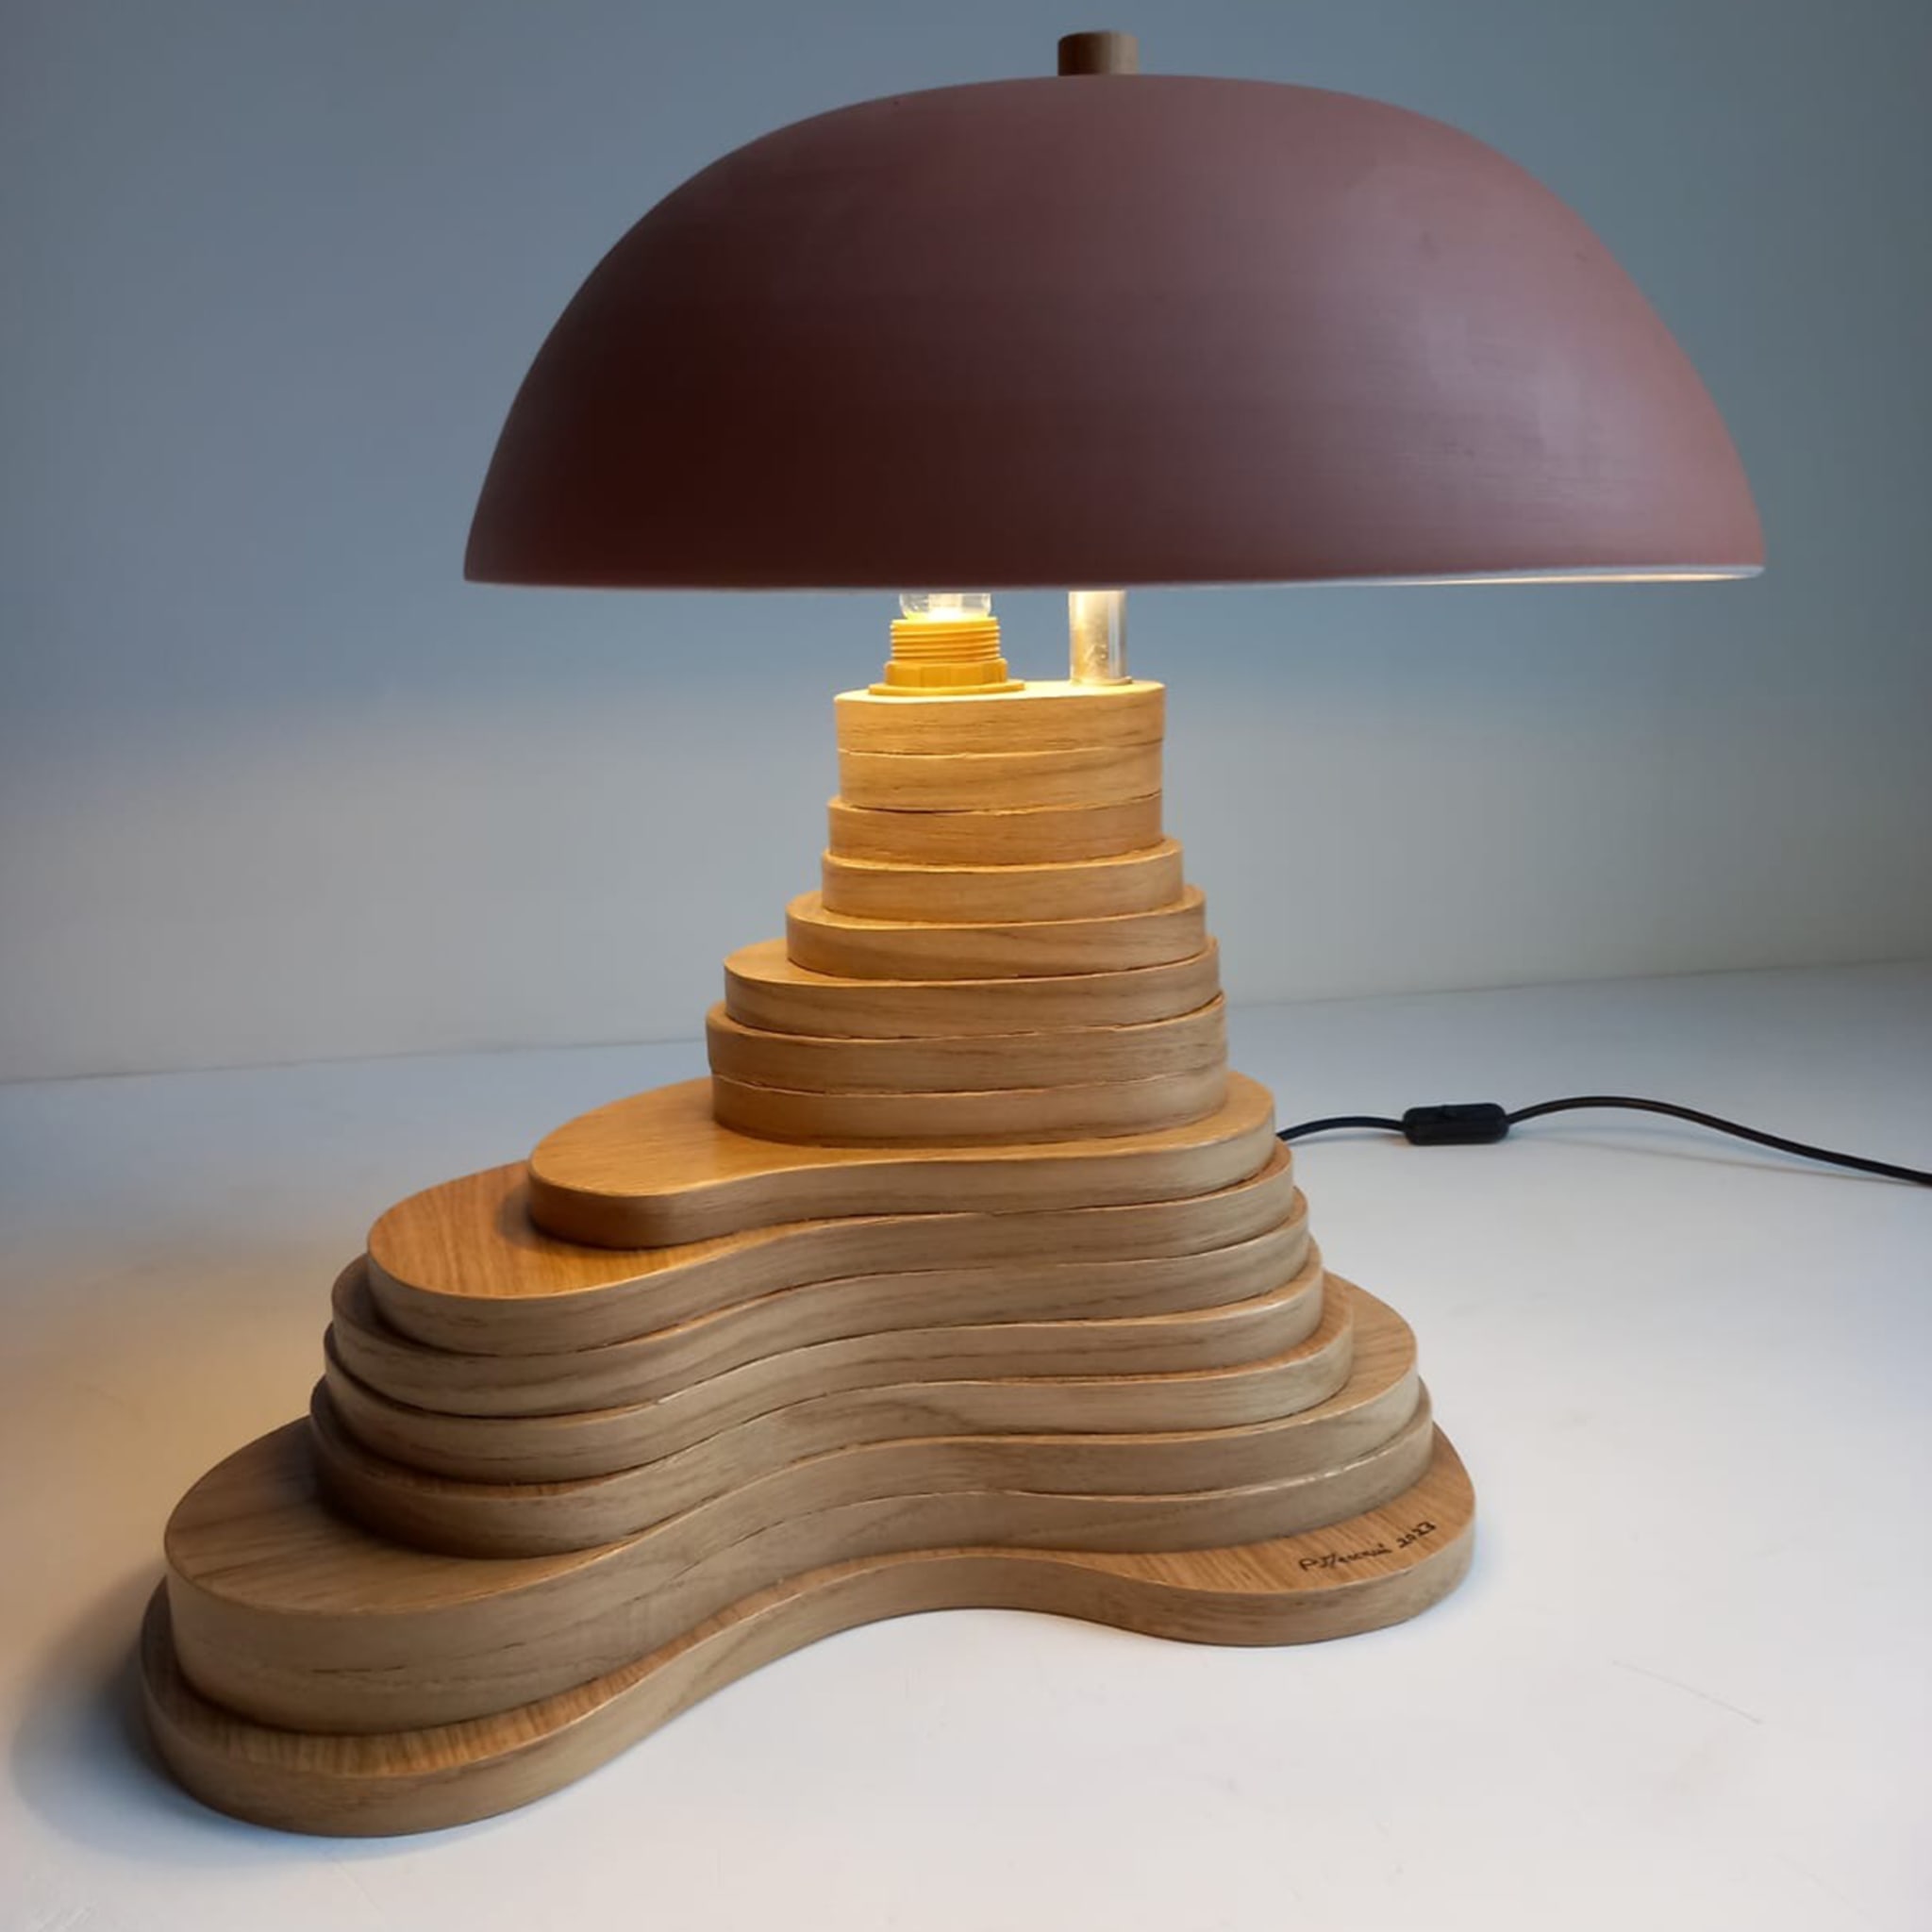 Fungus Table Lamp by Pietro Meccani - Alternative view 2